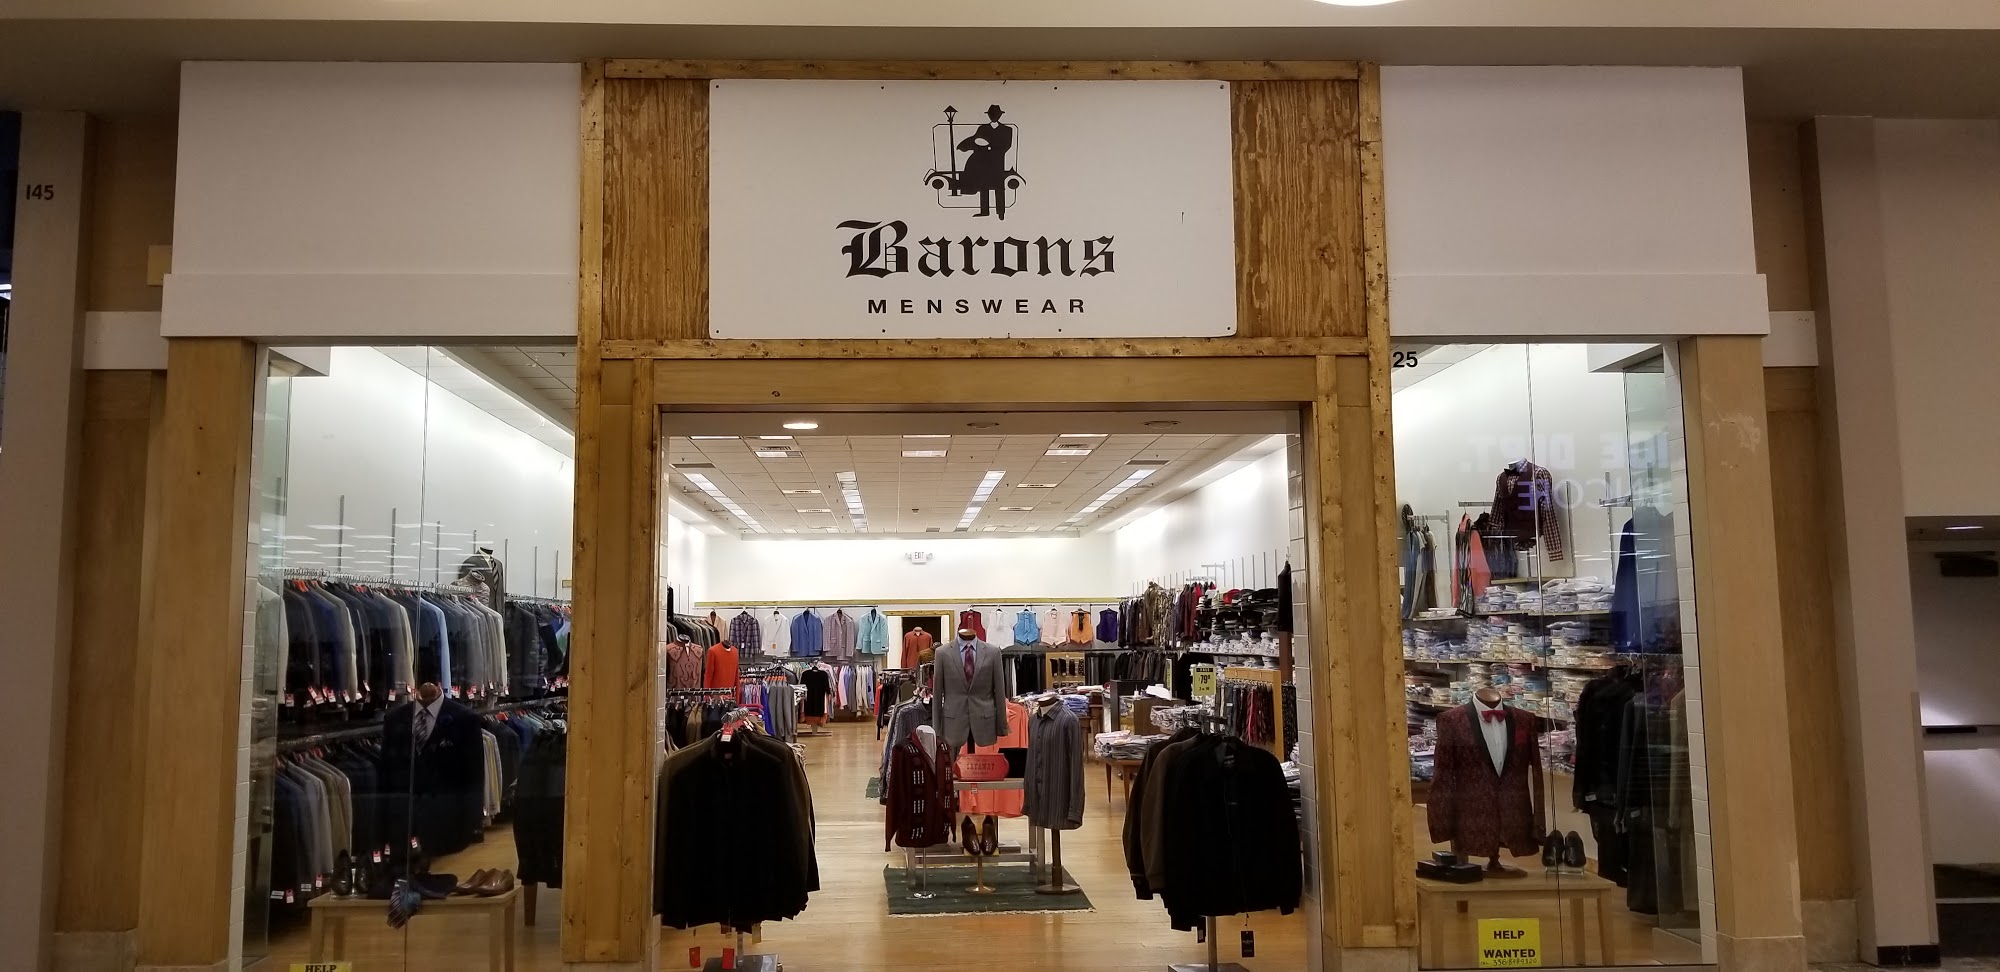 Baron’s Menswear